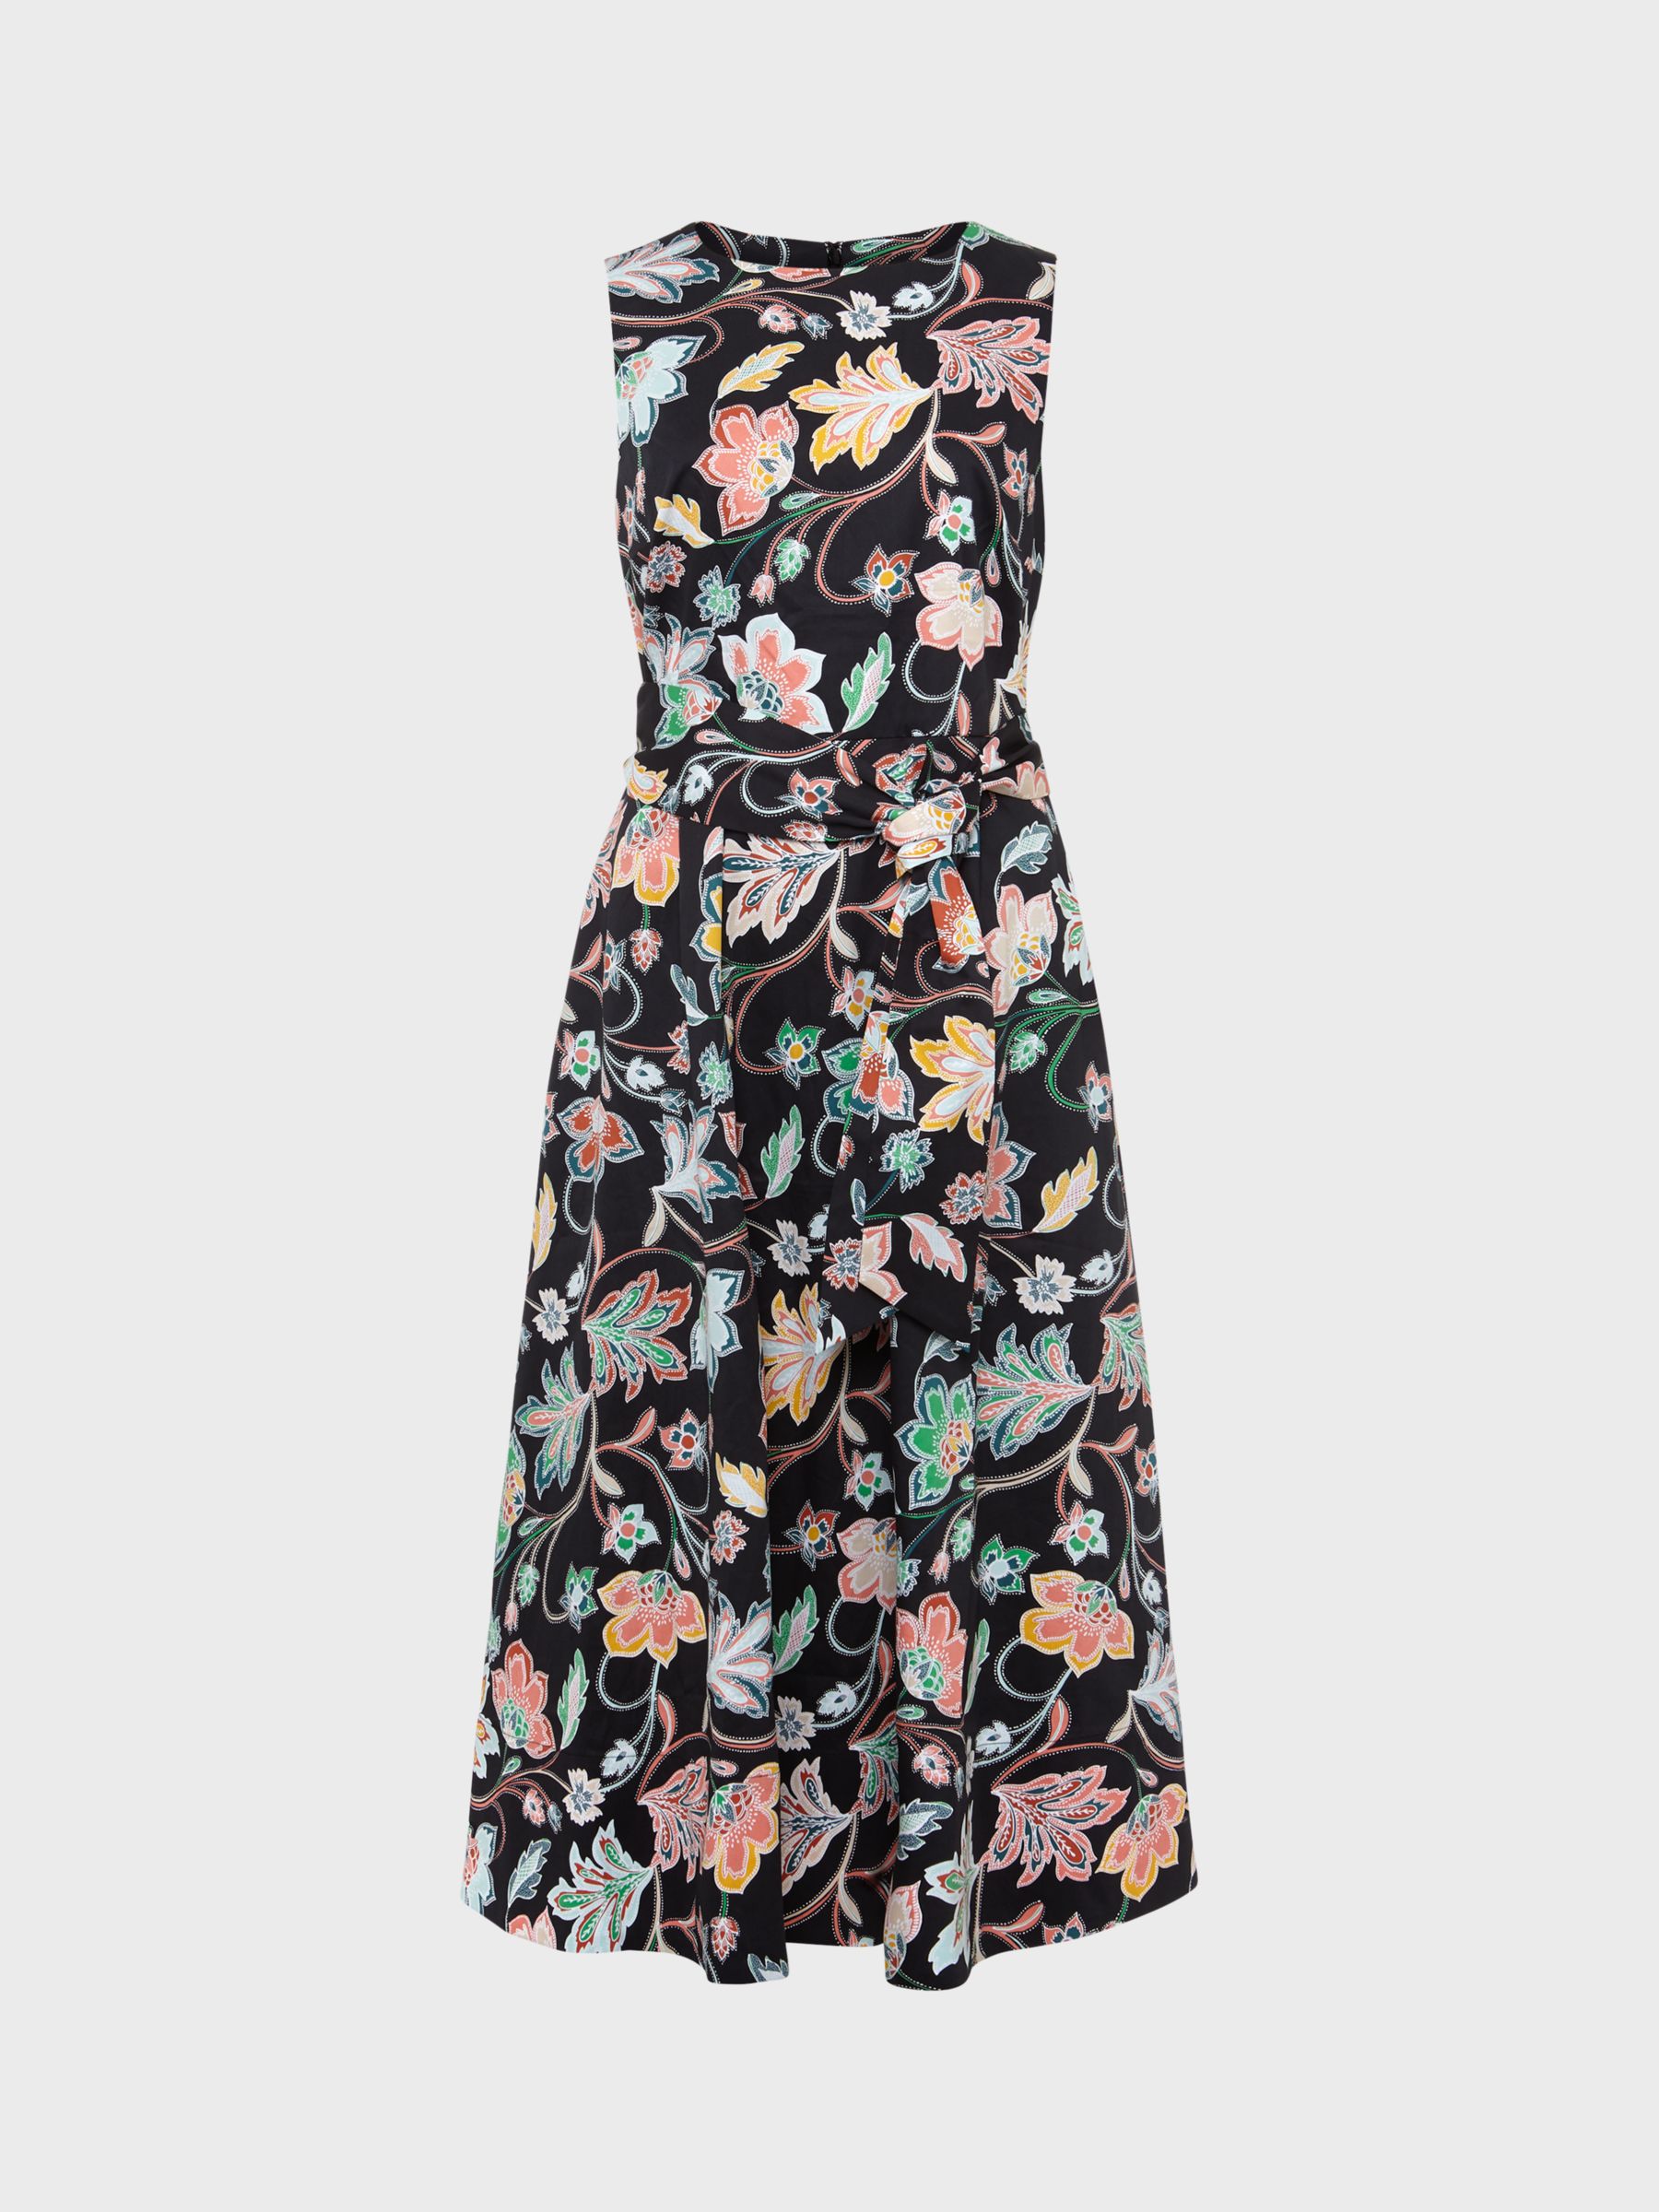 Hobbs Emilie Petite Floral Print Dress, Black/Multi, 6